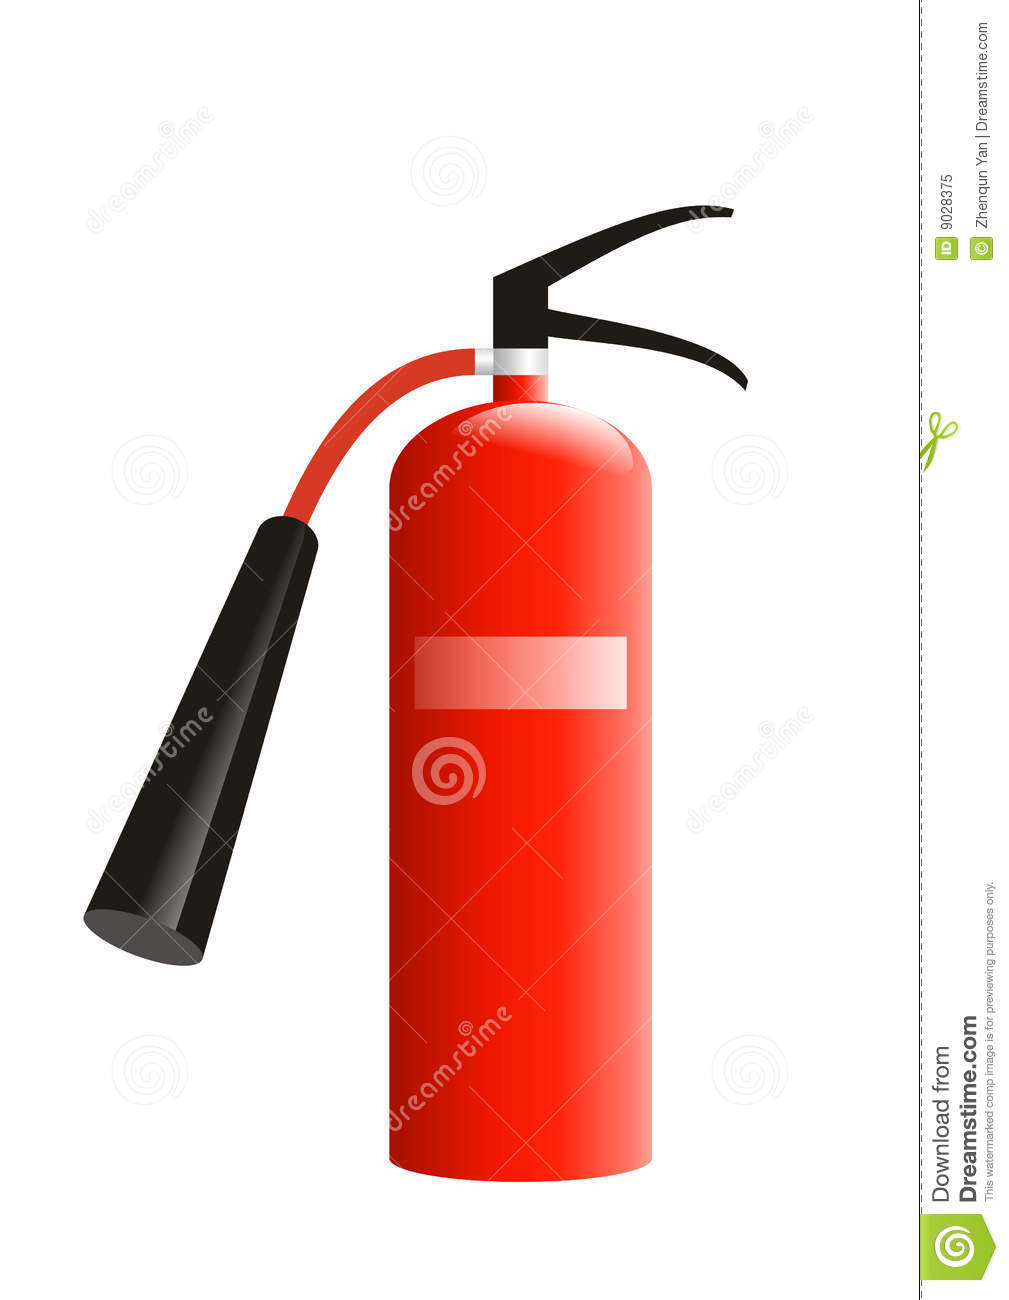 Fire Extinguisher Royalty Free Stock Photo   Image  9028375